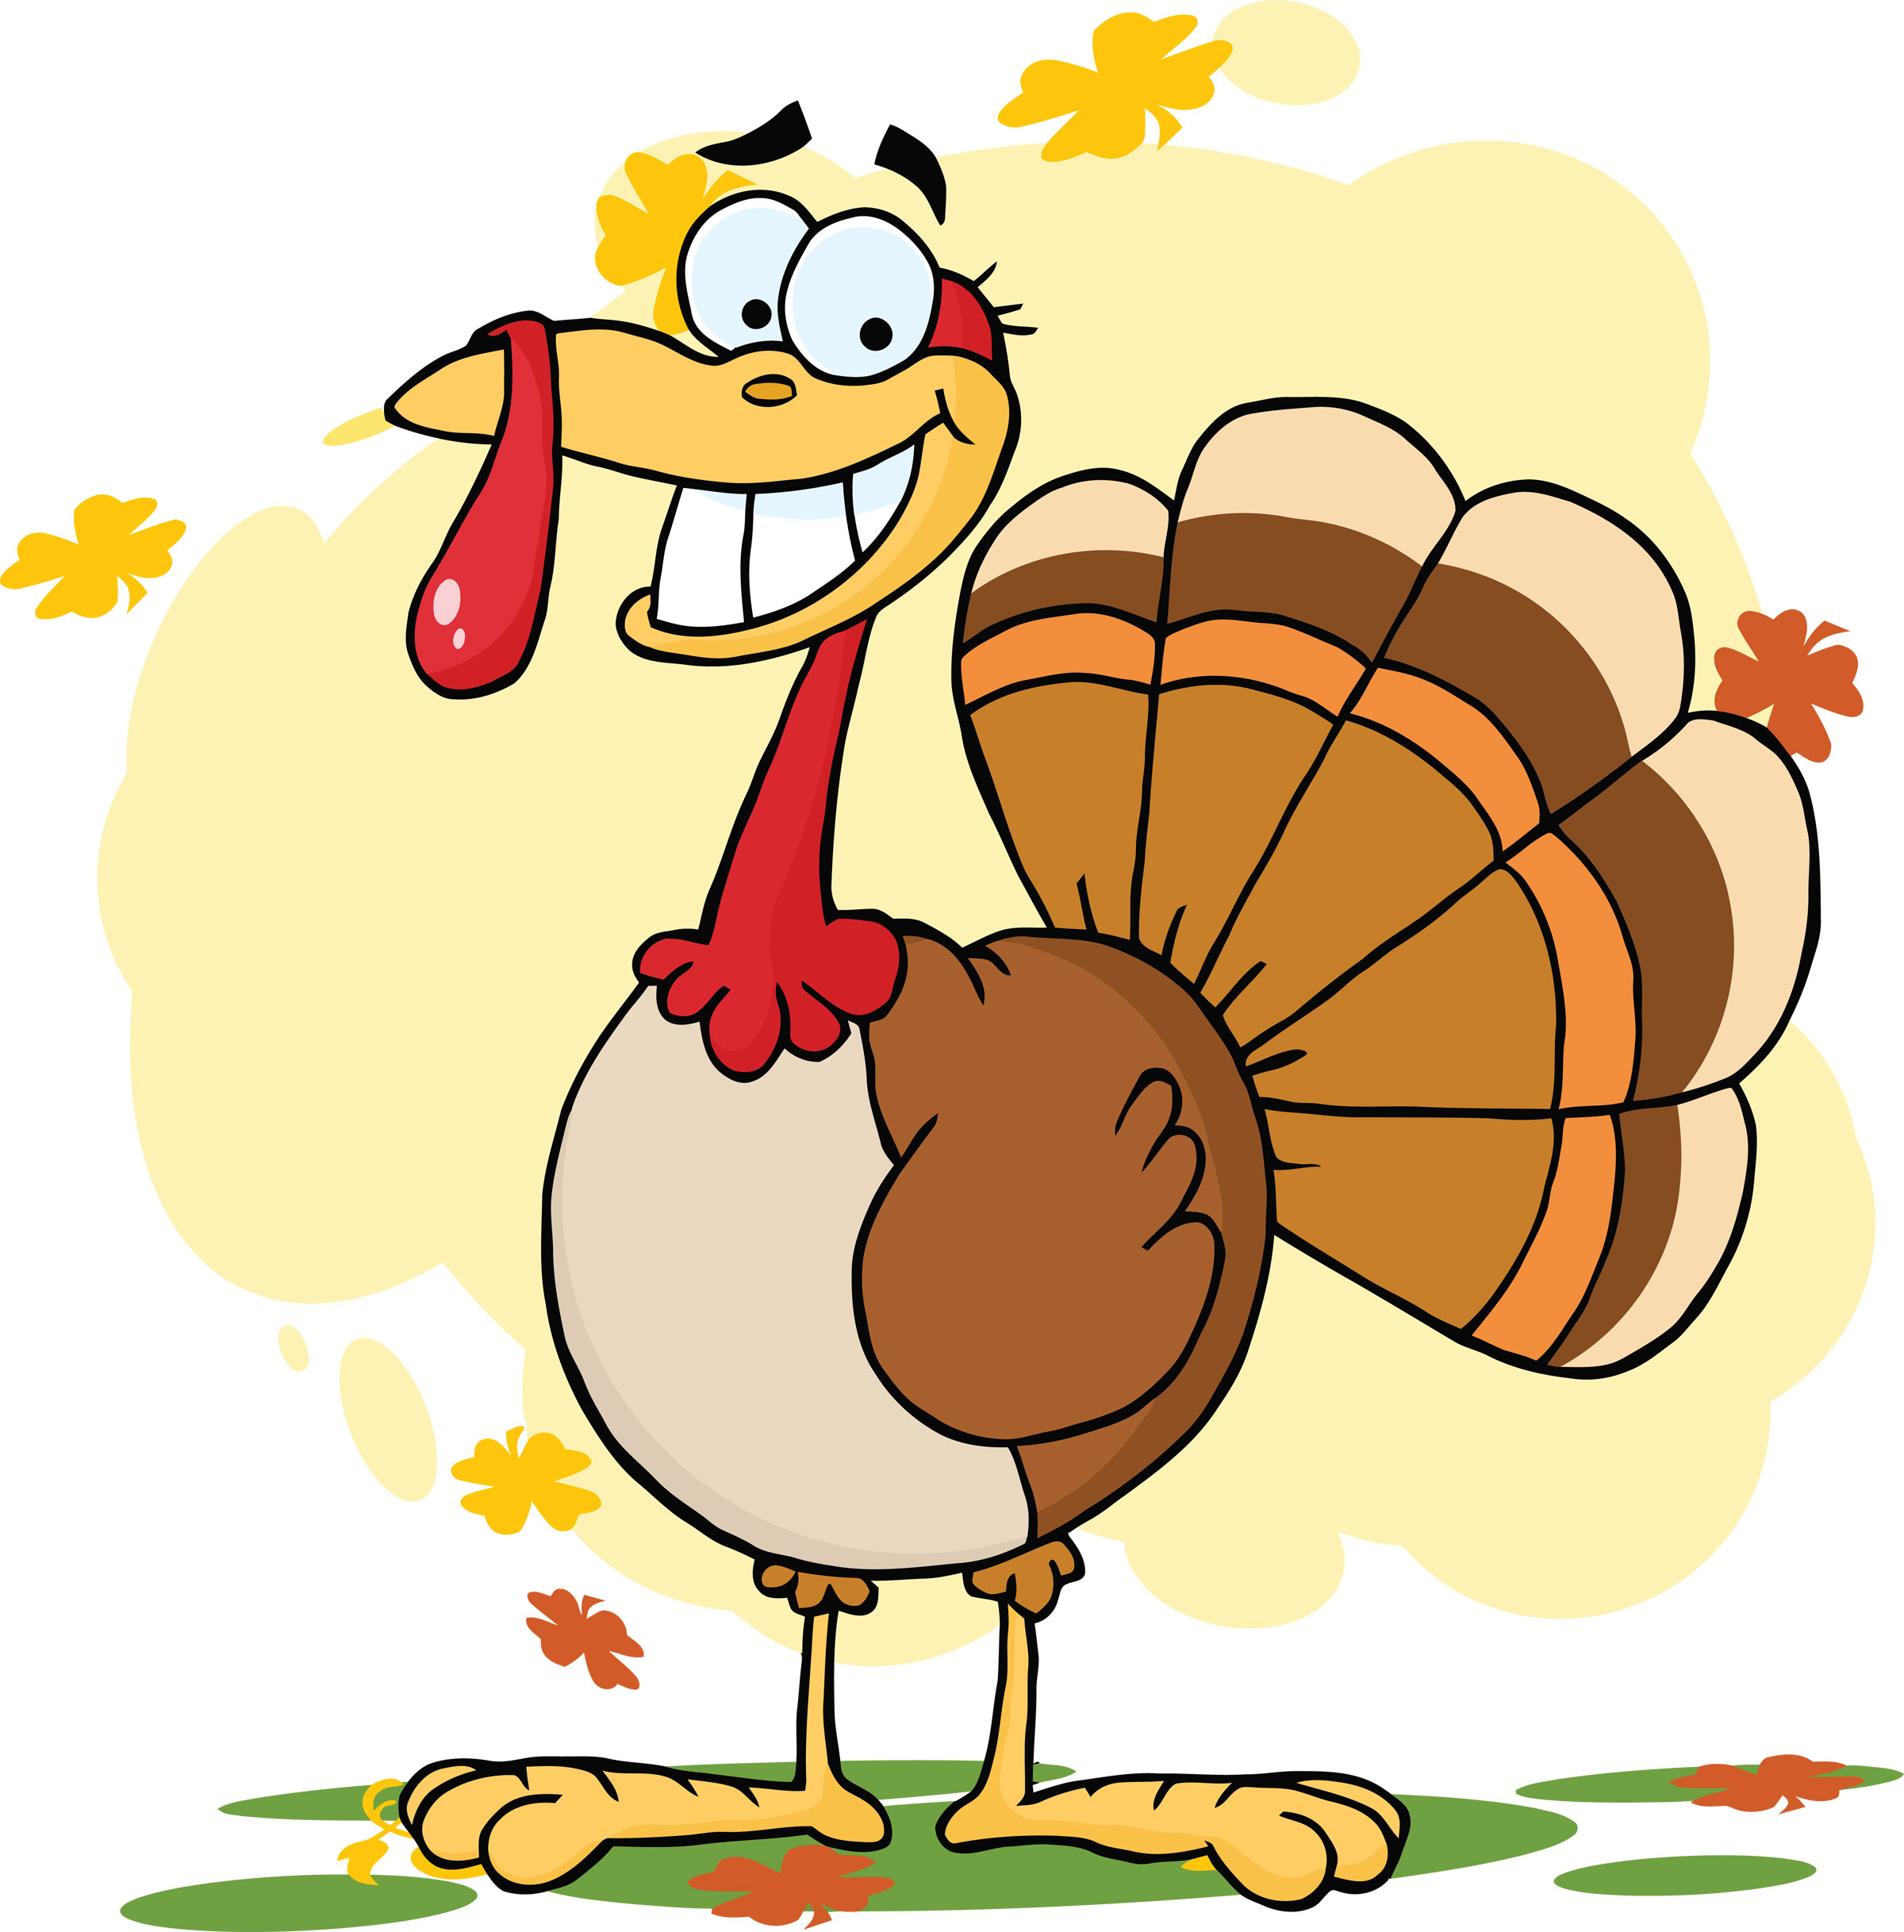 thanksgiving-cartoon-turkey-awesome-friday-feature-steinbronn-of-thanksgiving-cartoon-turkey.jpg